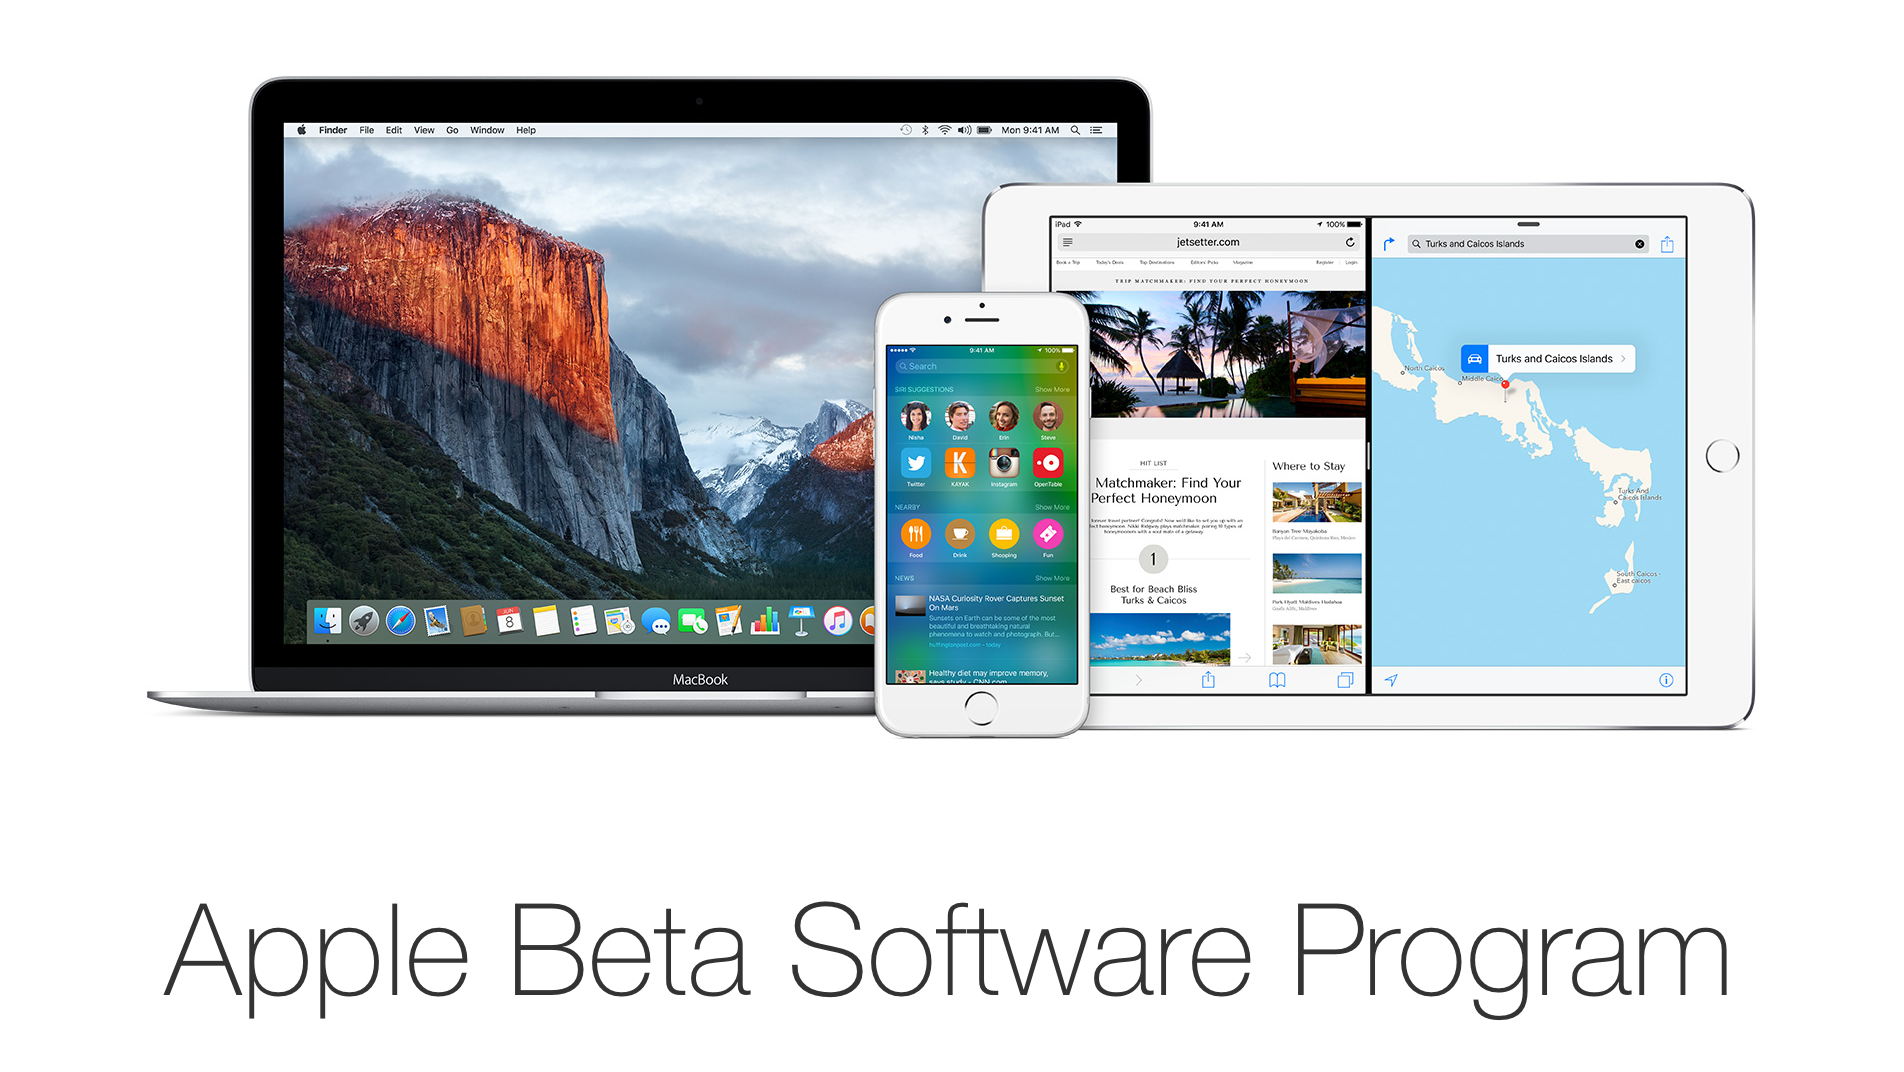 Apple beta software program macos update